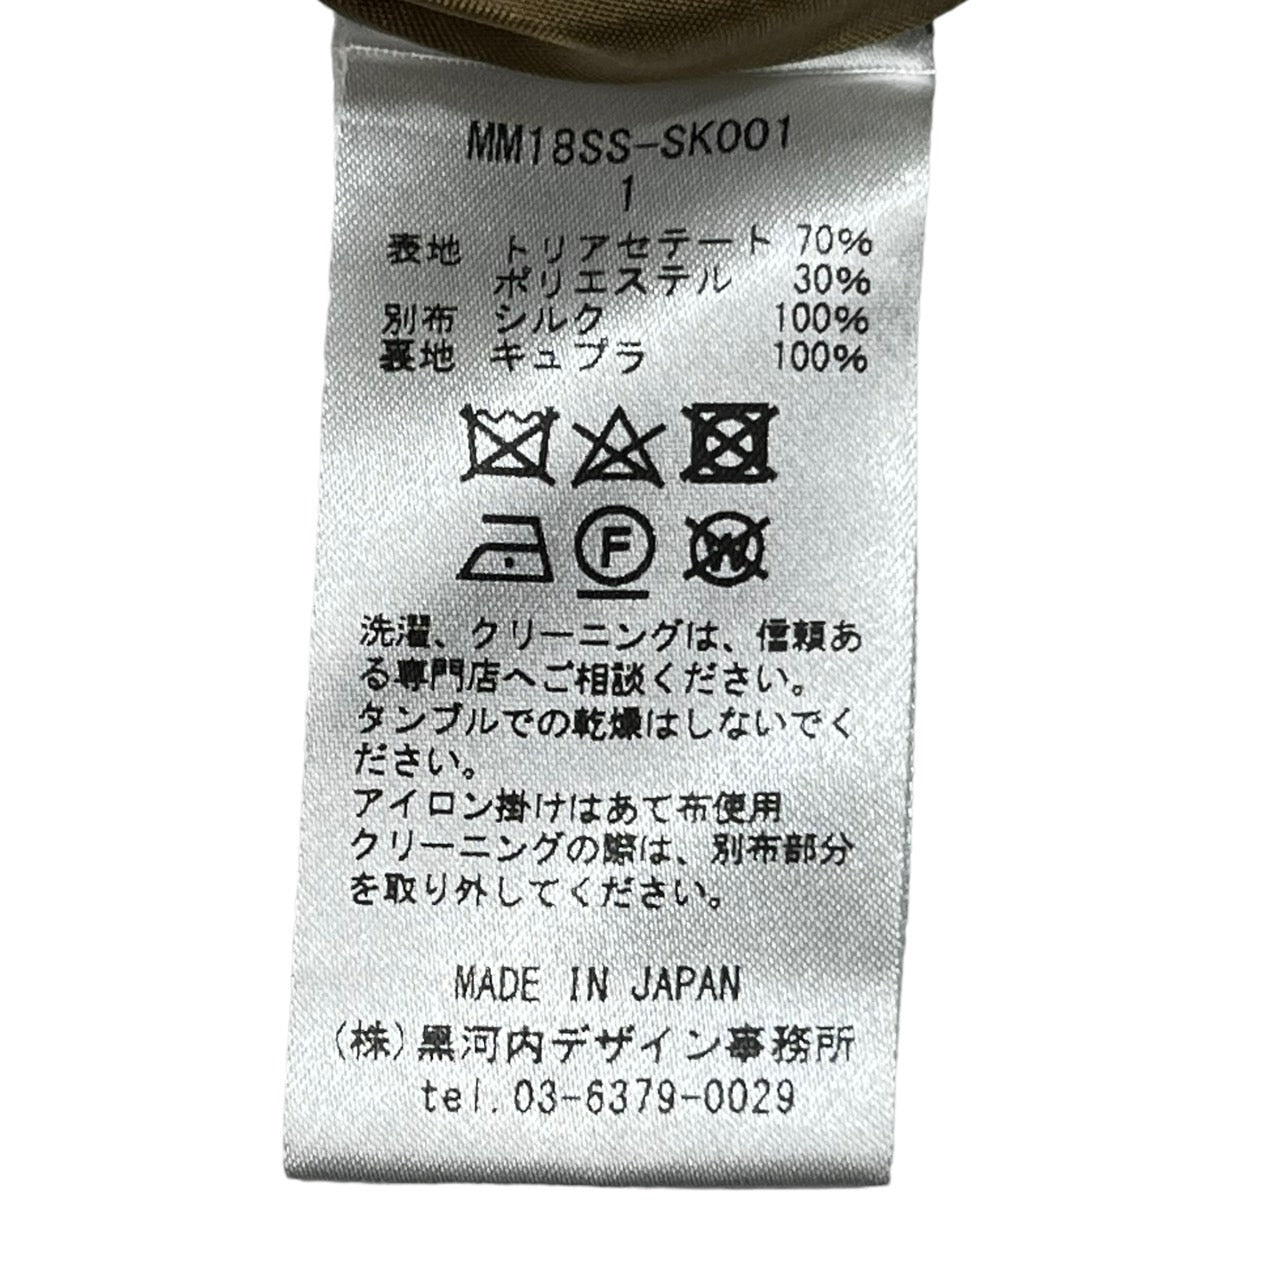 mame kurogouchi(マメクロゴウチ) 18SS LacePeplum Skirt フラワー シルク レース ロング タイト スカート MM18SS-SK001 1(S程度) ブラウン